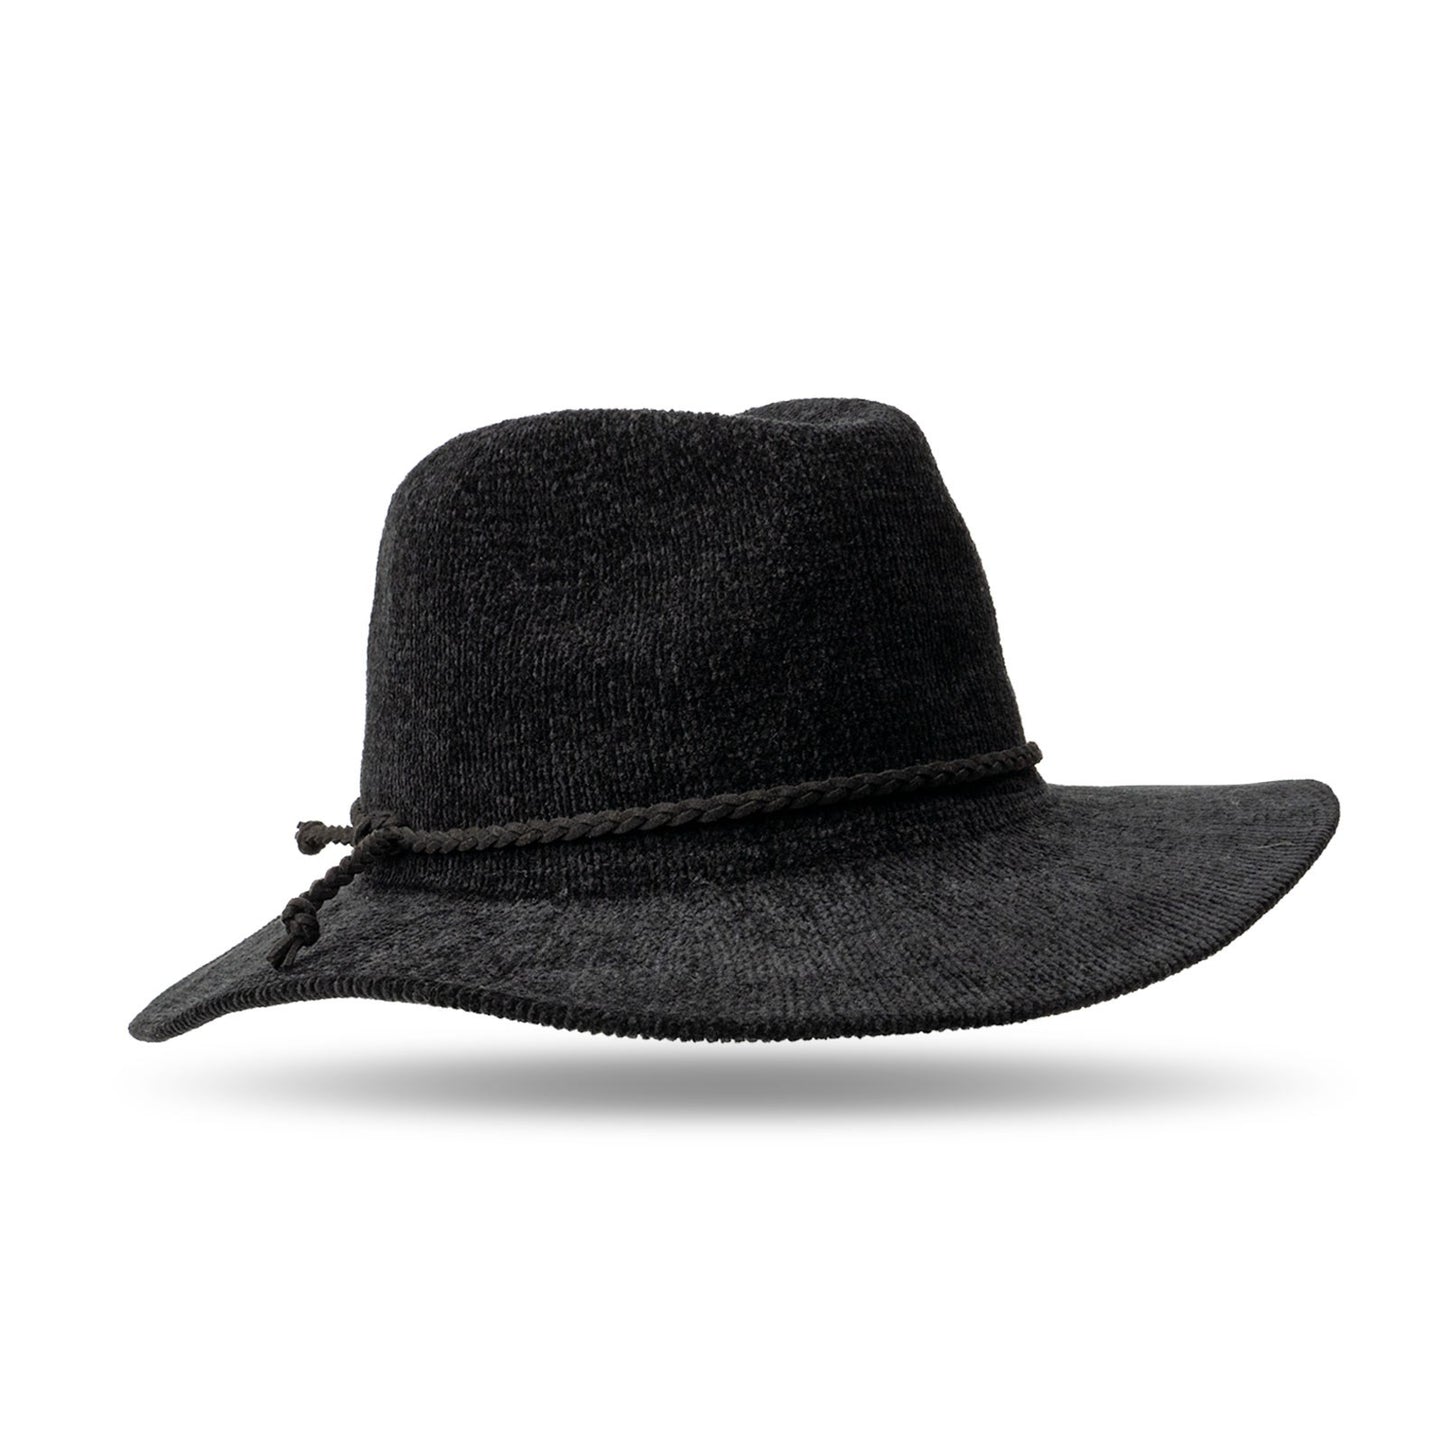 Chenille Getaway Panama Hat